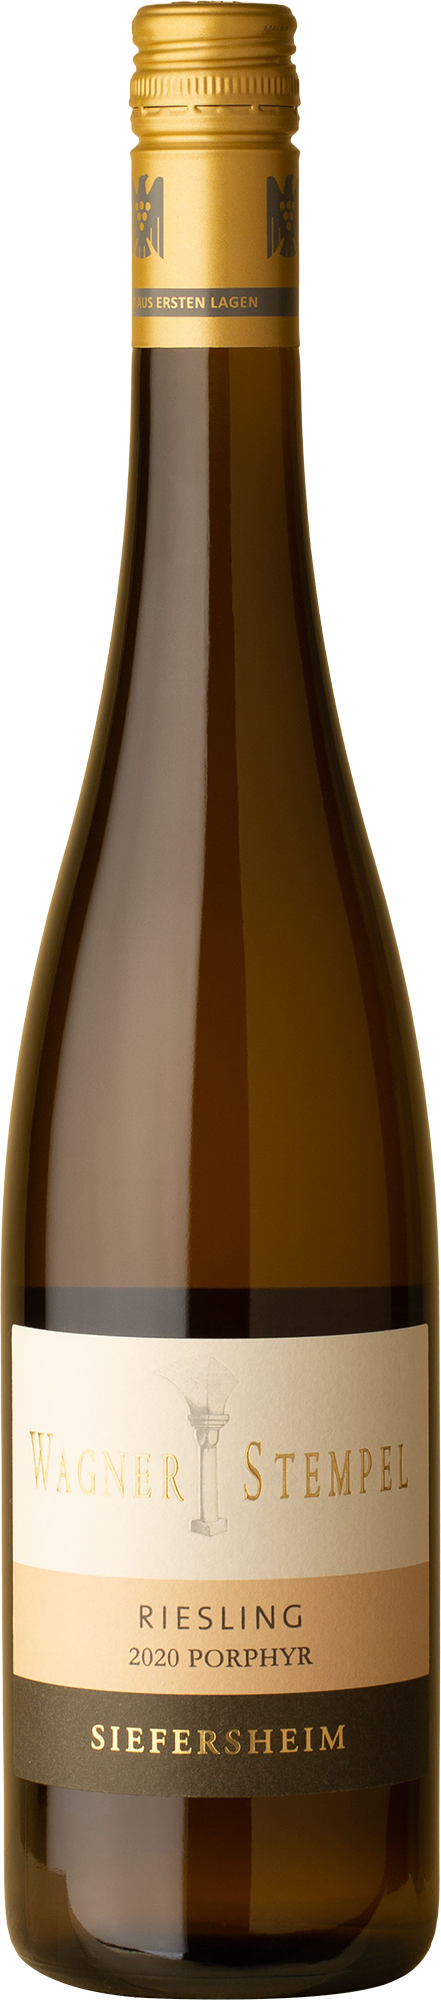 Wagner Stempel - Porphyr Trocken Riesling 2020 White Wine